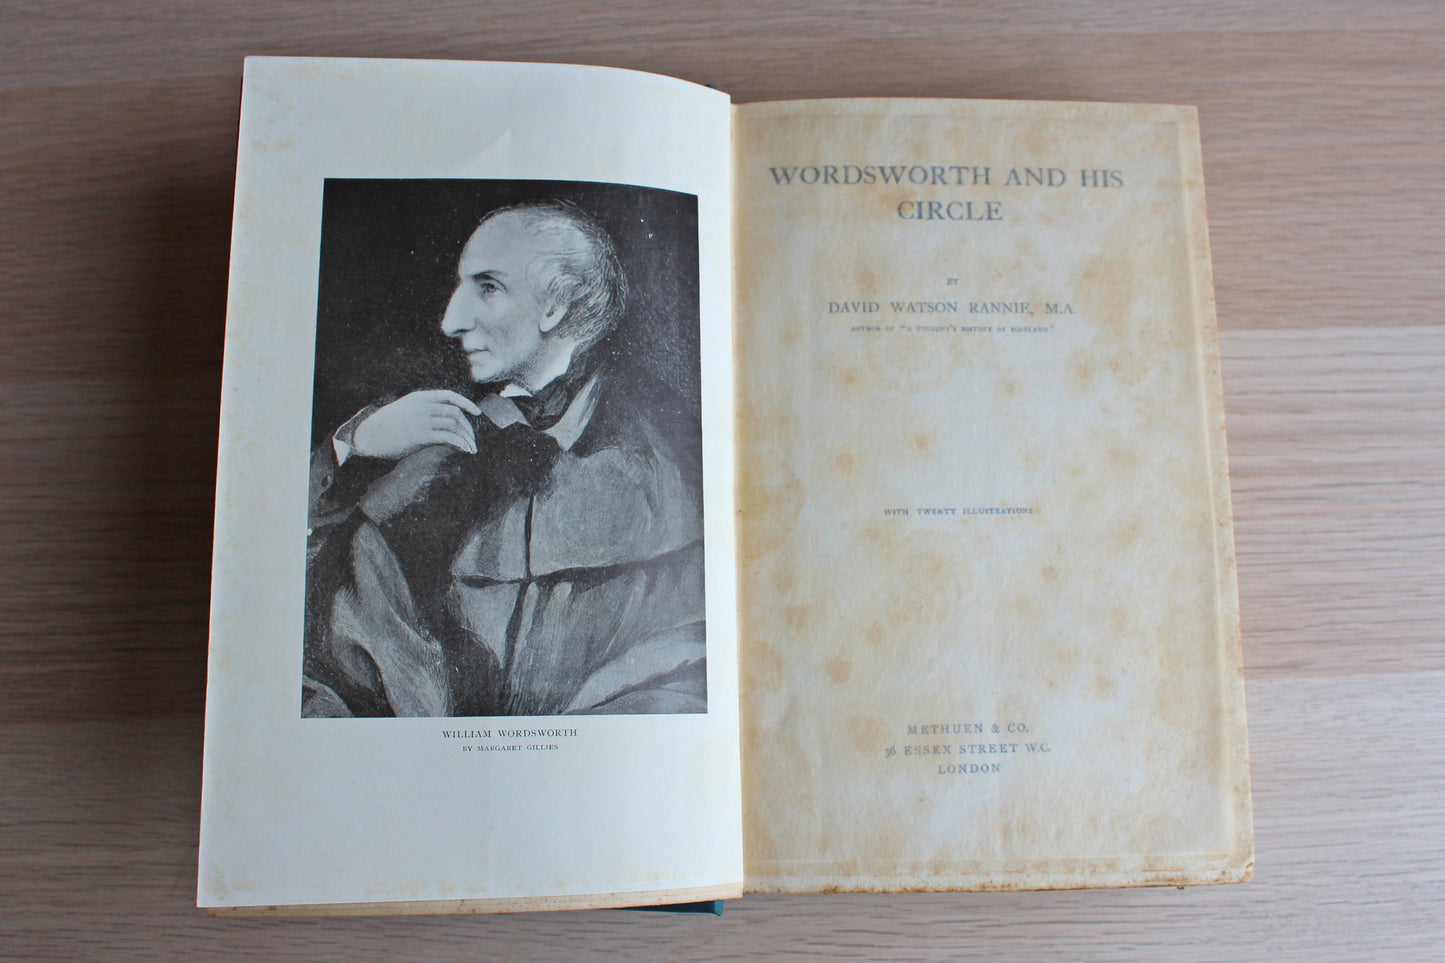 Wordsworth and His Circle by David Watson Rannie, M.A.